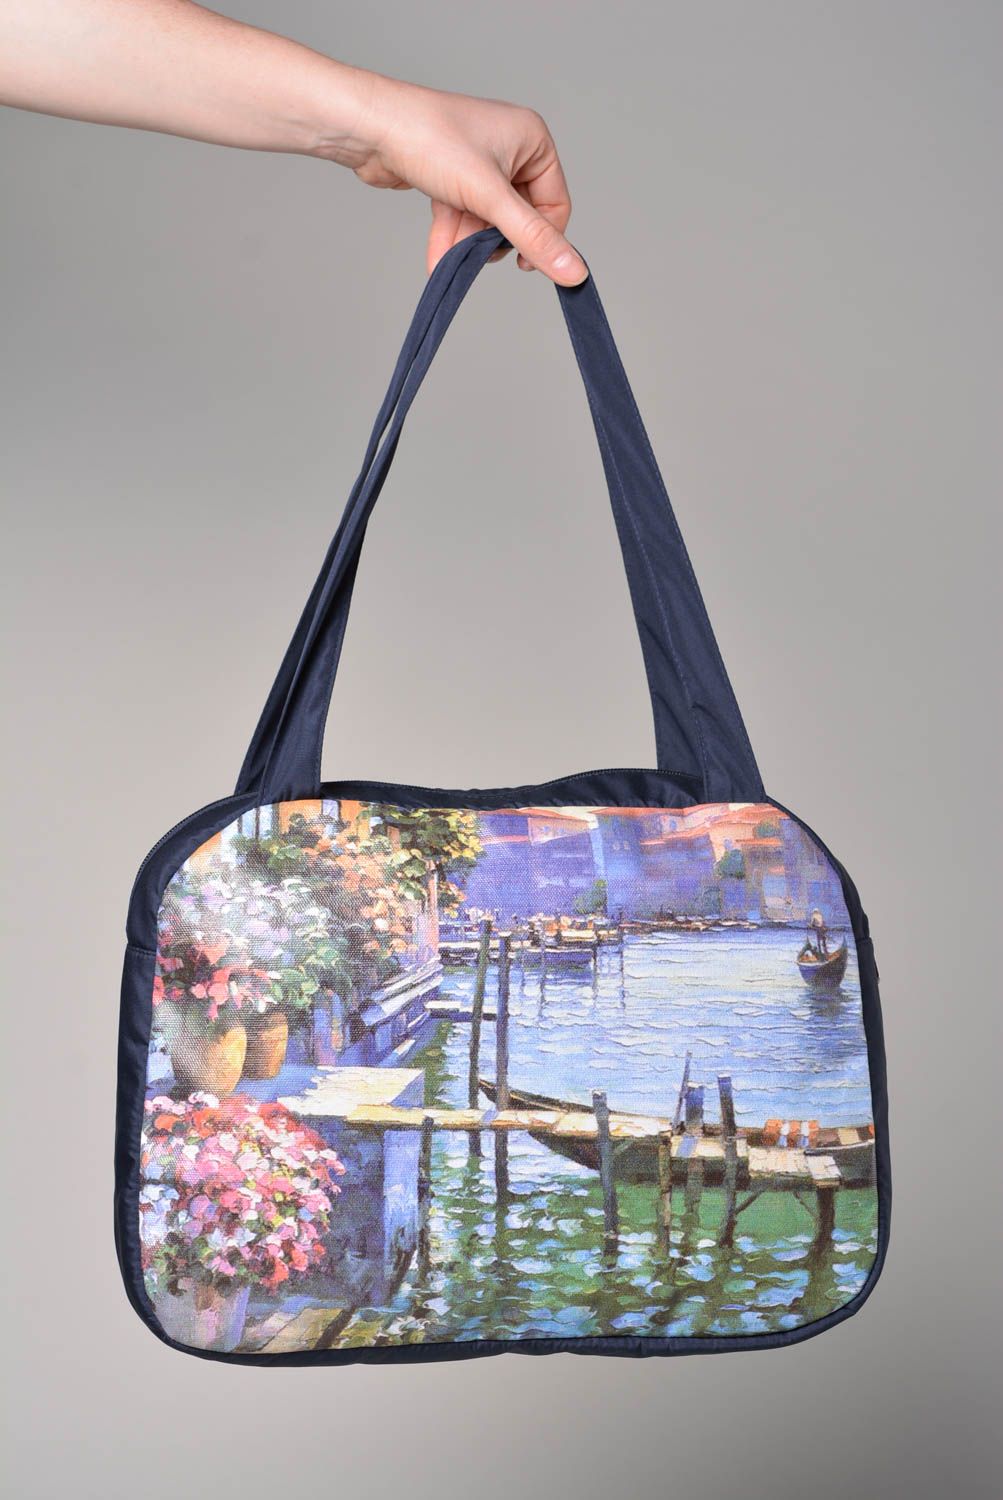 Beautiful handmade fabric handbag fashion accessories shoulder bag design photo 2